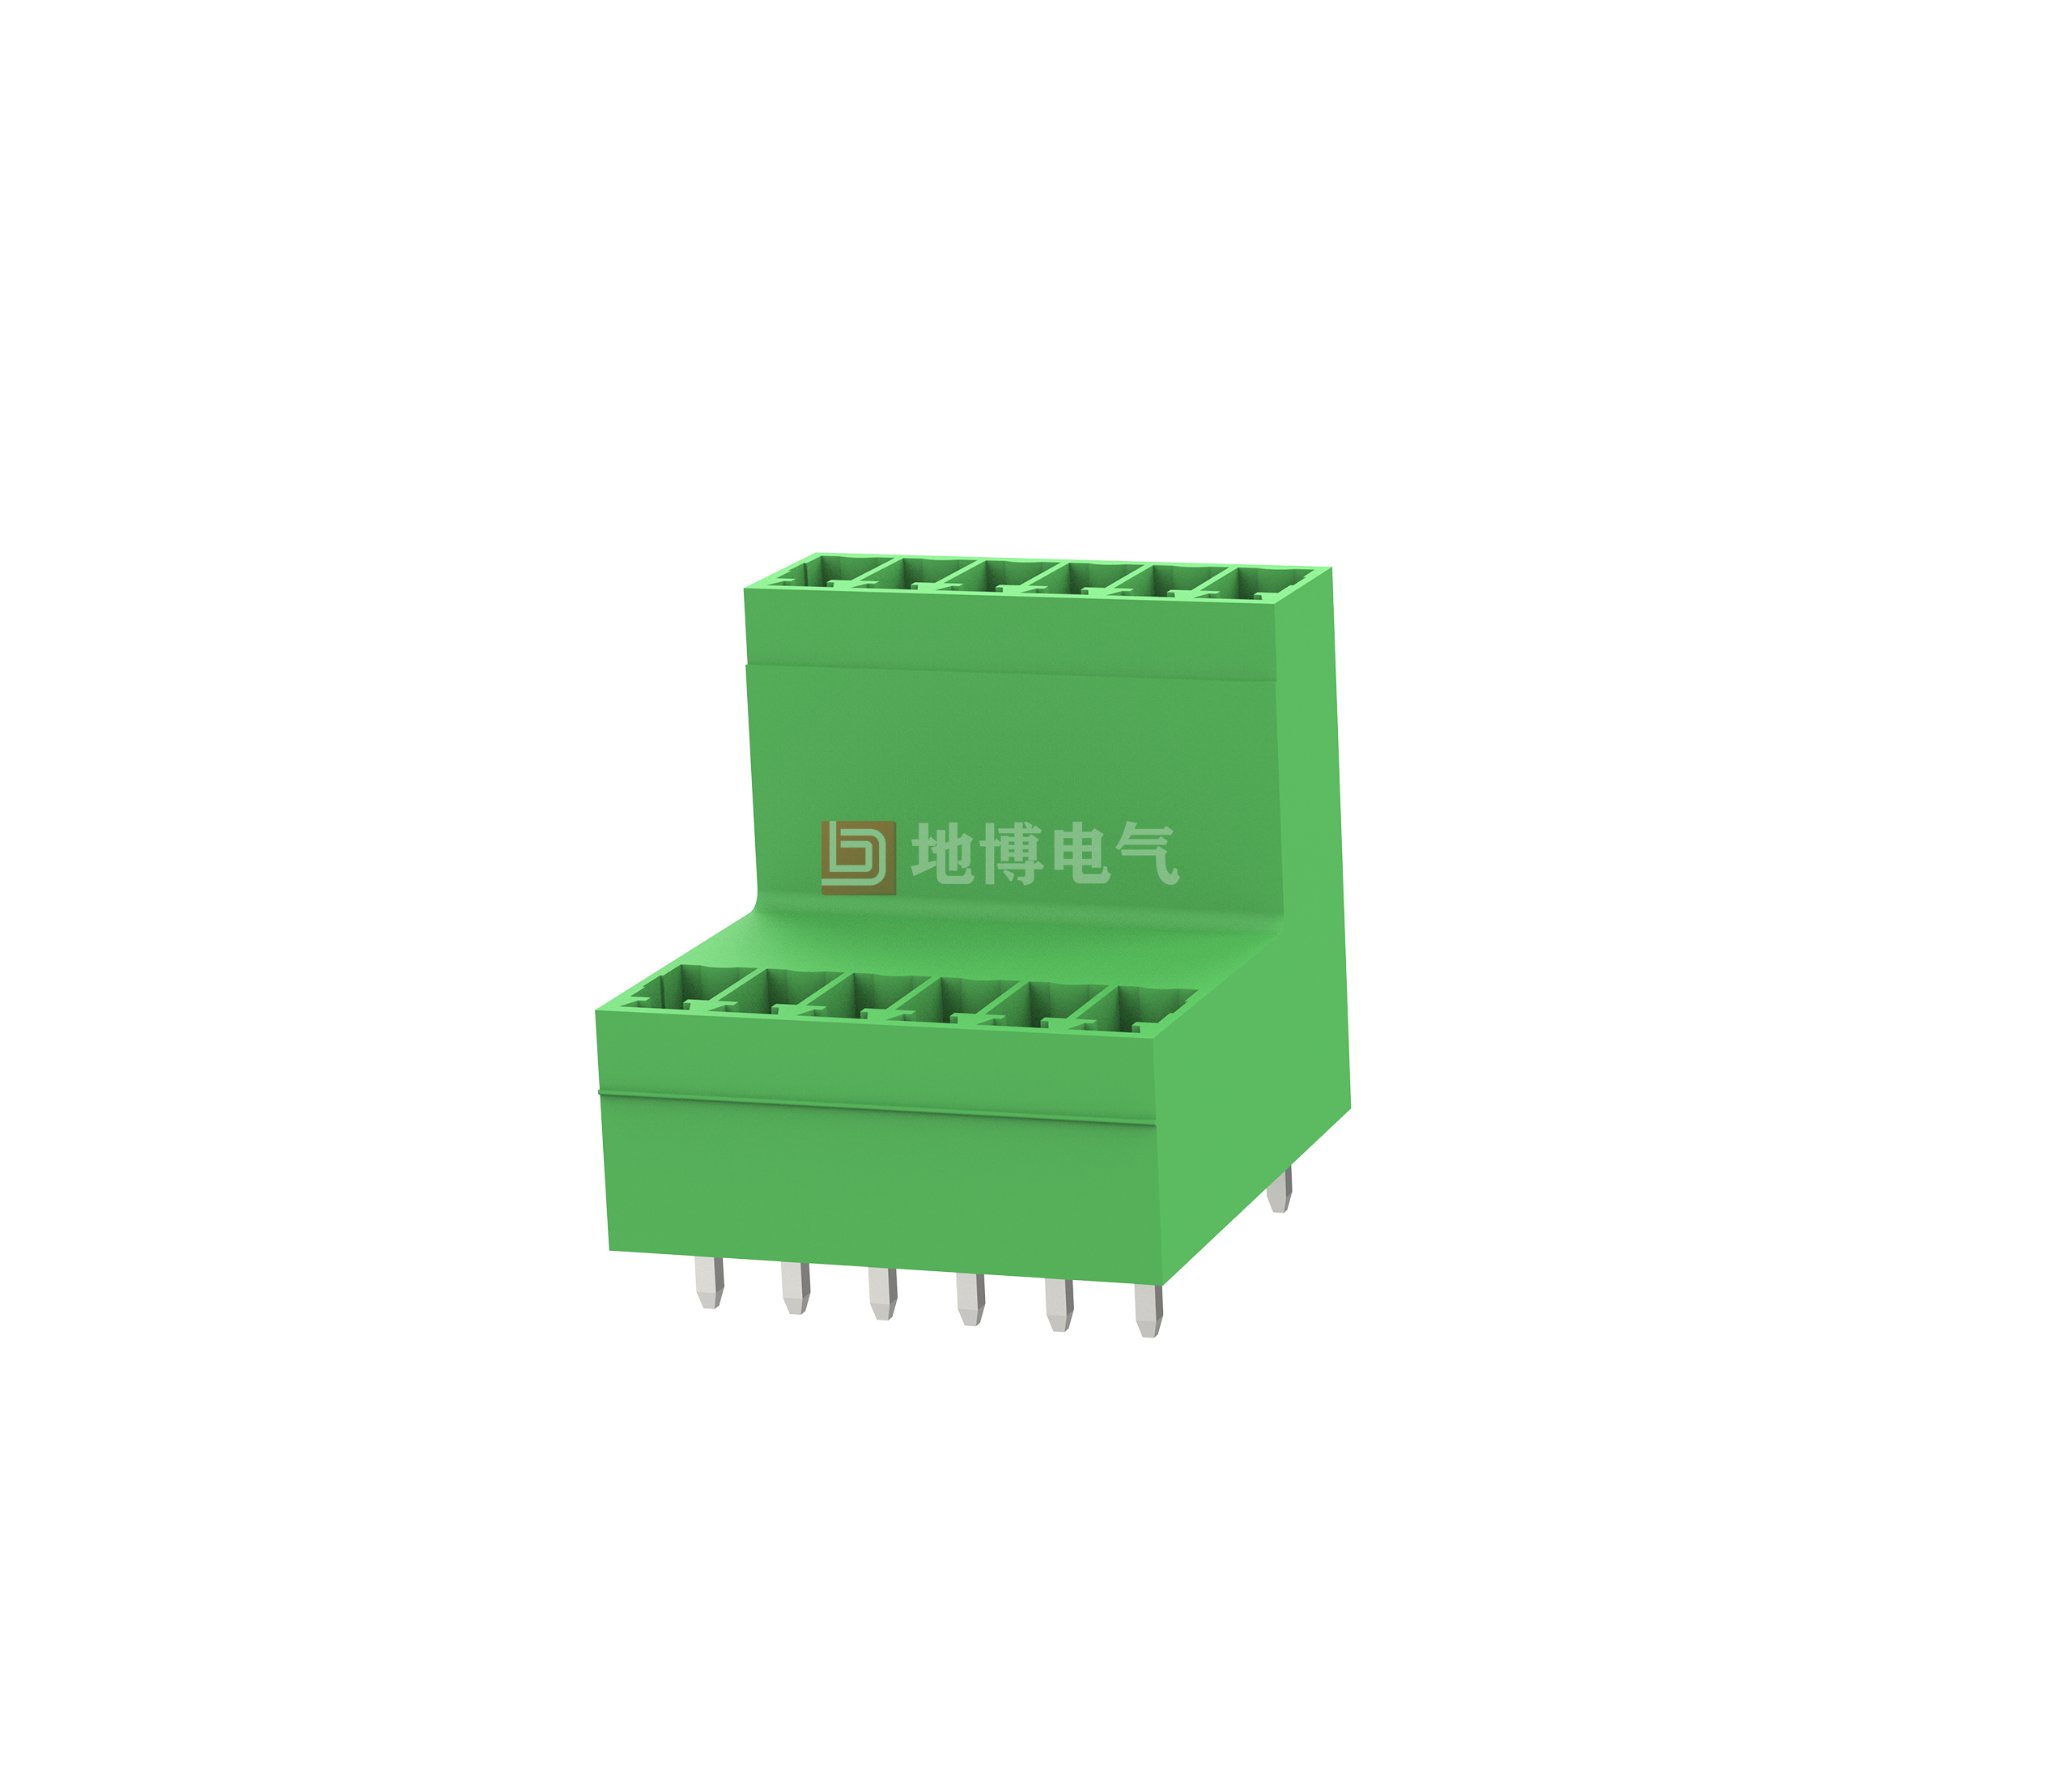 PCB socket DB2EVTC-3.81